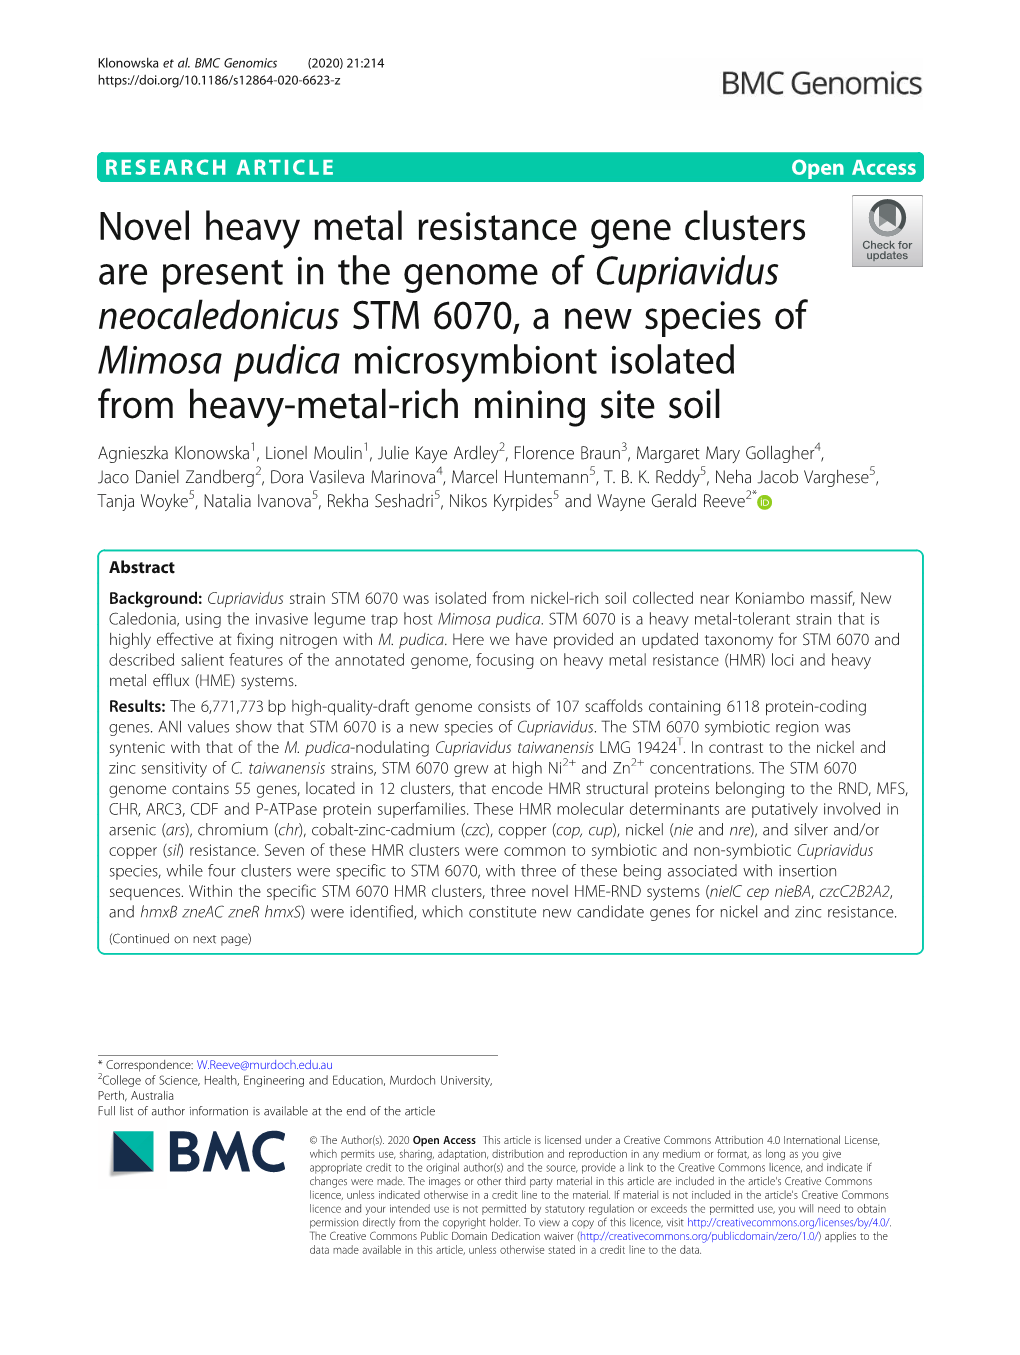 Novel Heavy Metal Resistance Gene Clusters Are Present